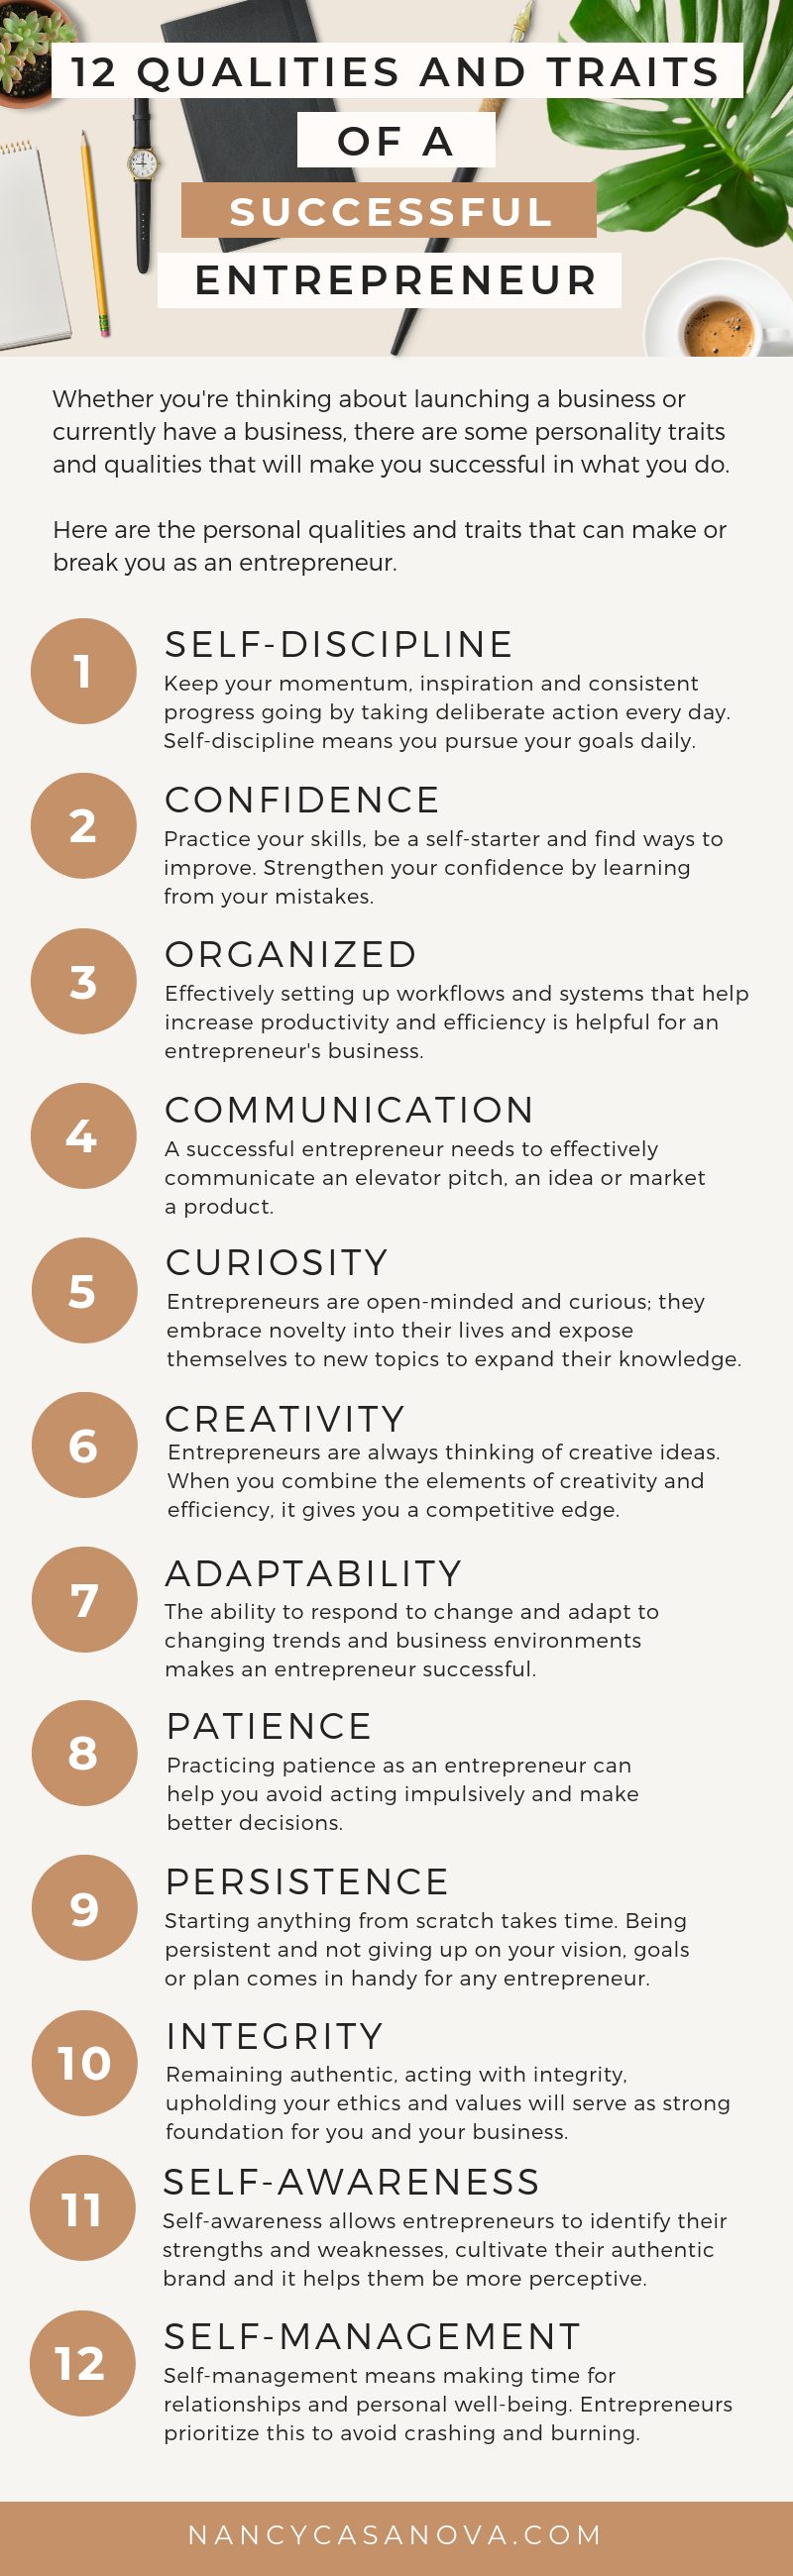 12-traits-of-successful-entrepreneurs-nancycasanova